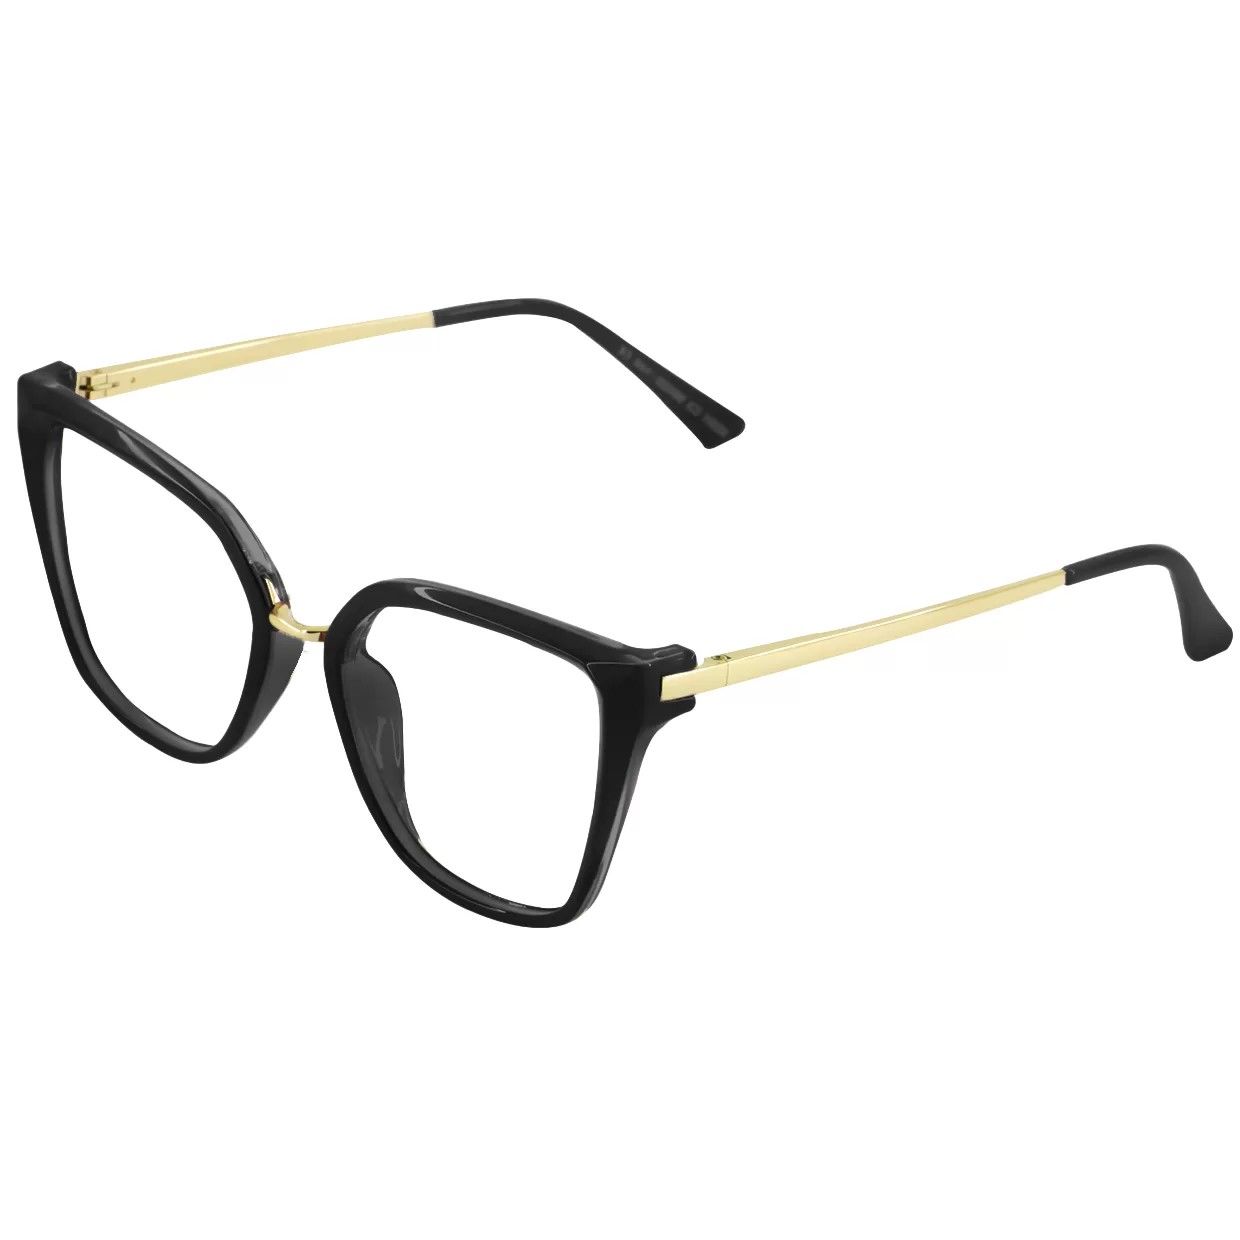 فریم عینک طبی گودلوک 95301 -  - 2